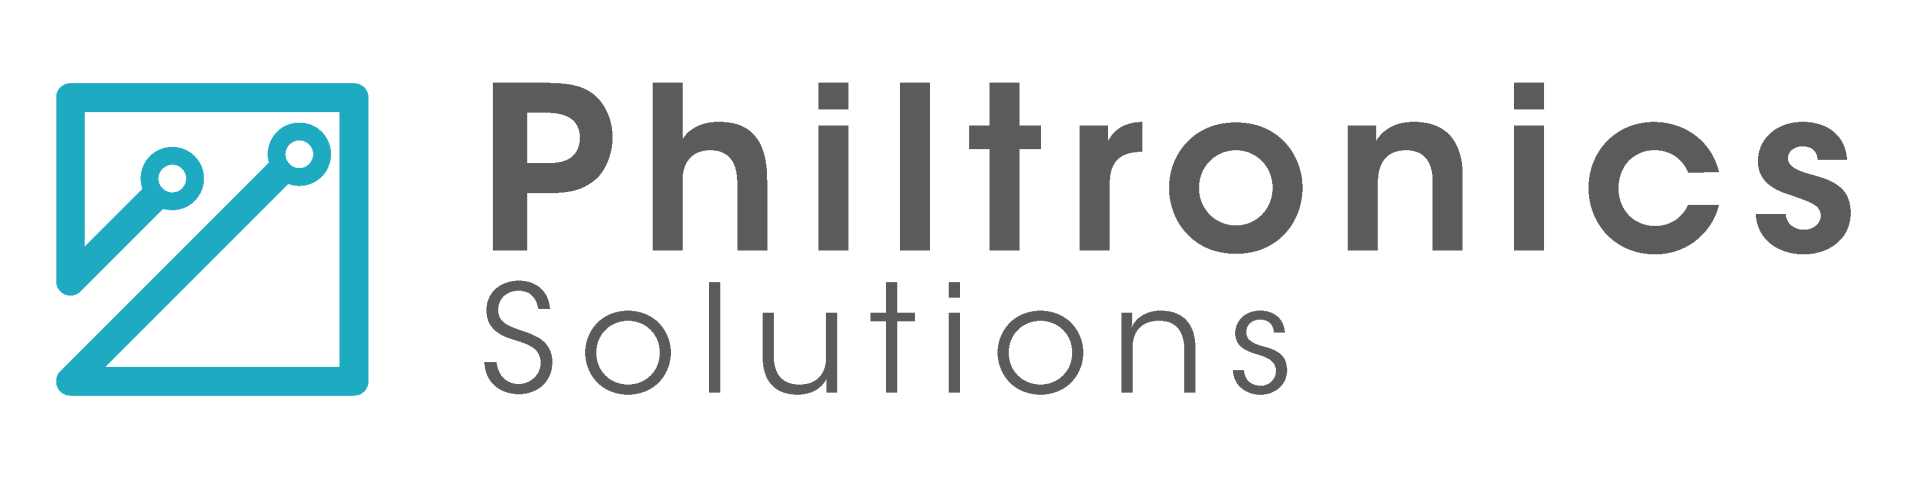 Philtronics Solutions Logo